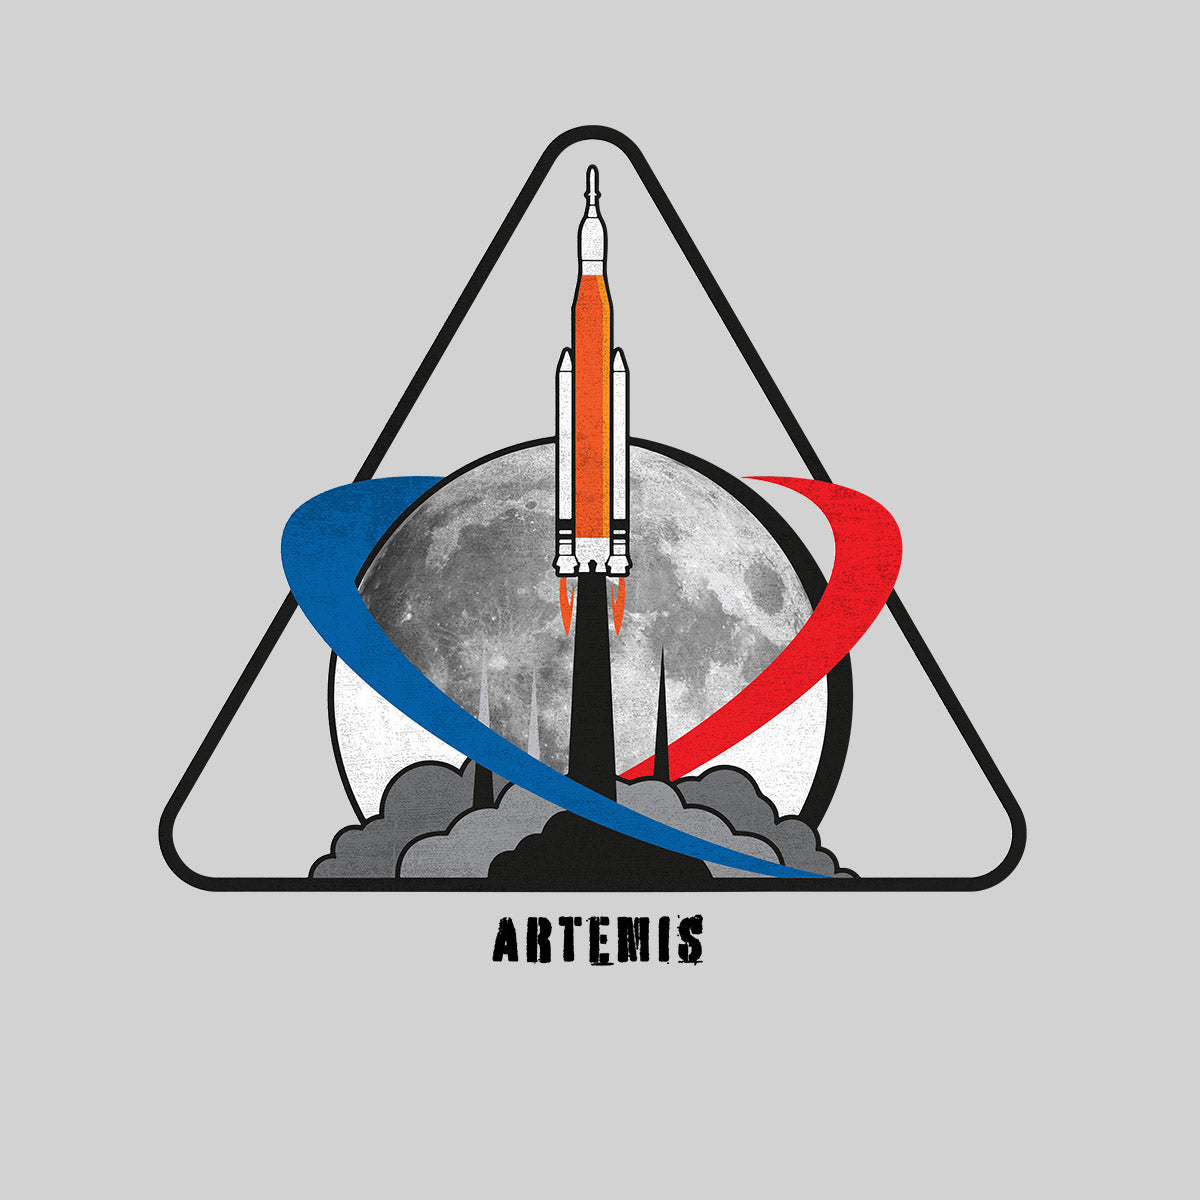 Artemis Nasa Moon Mission  T-shirt for Kids